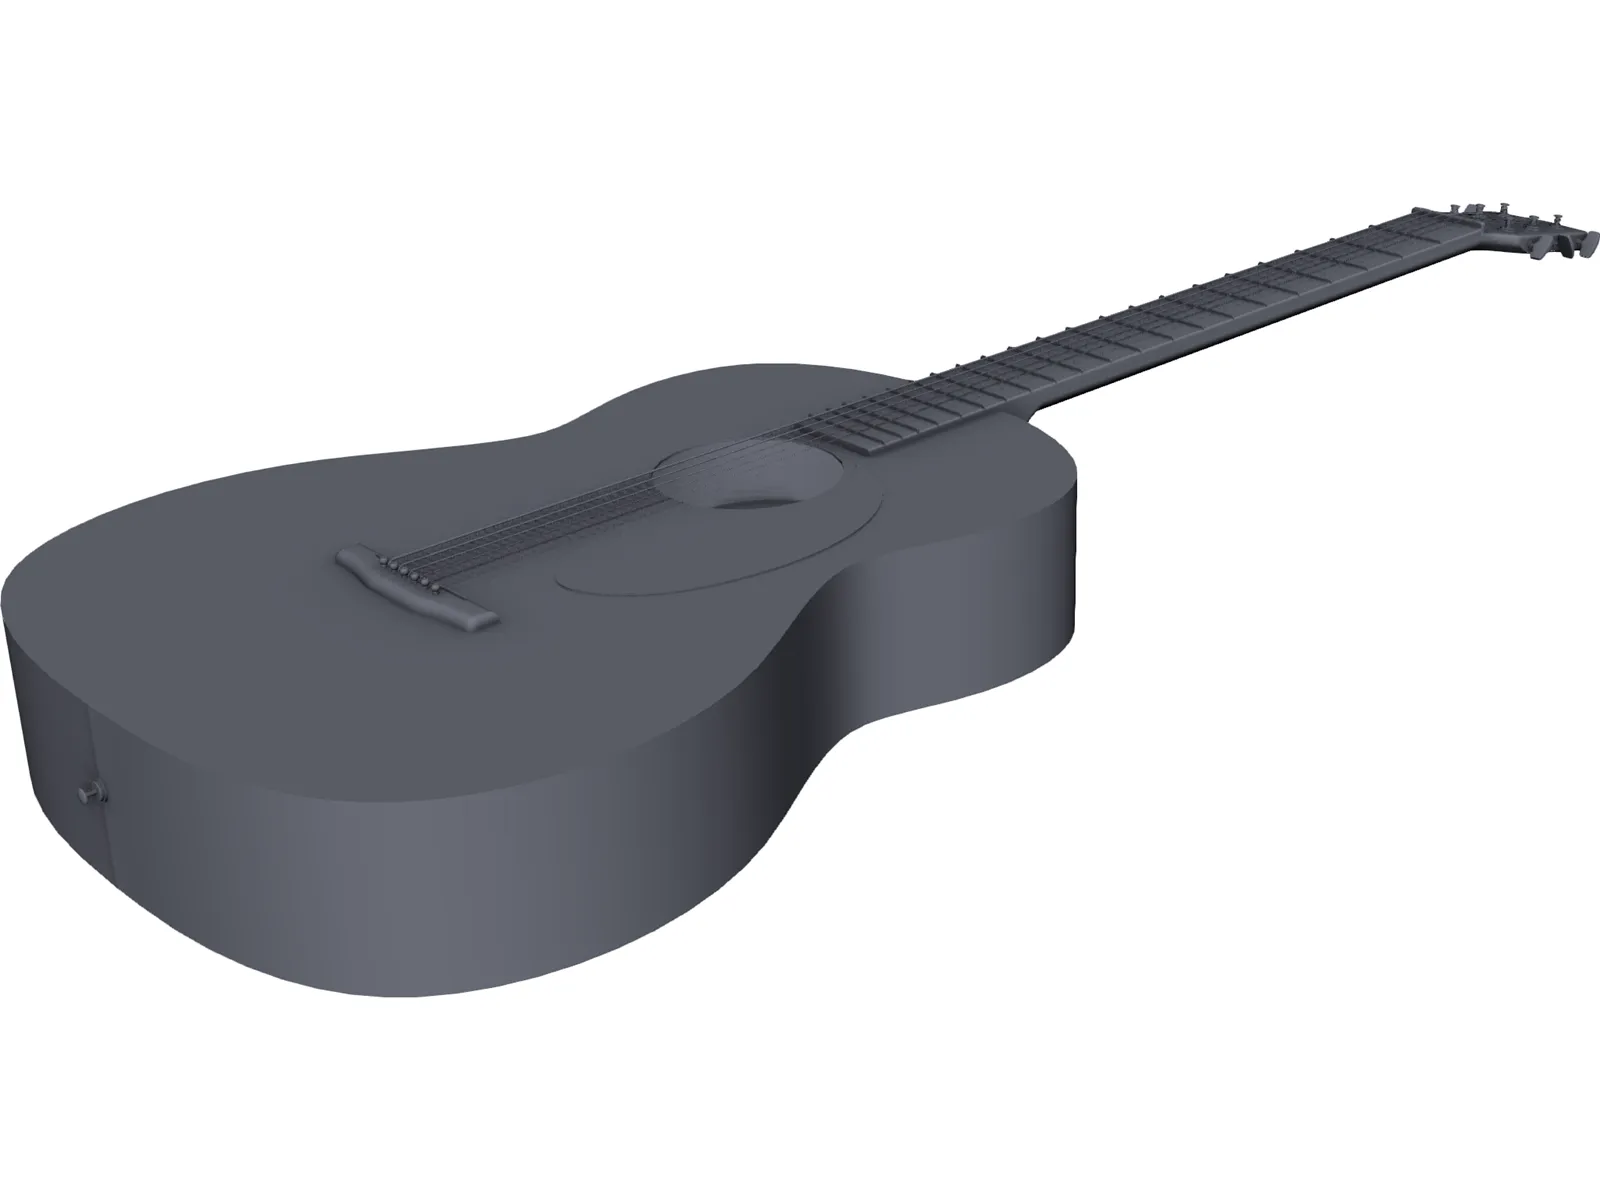 Yamaha Acoustic Guitar 3D Model